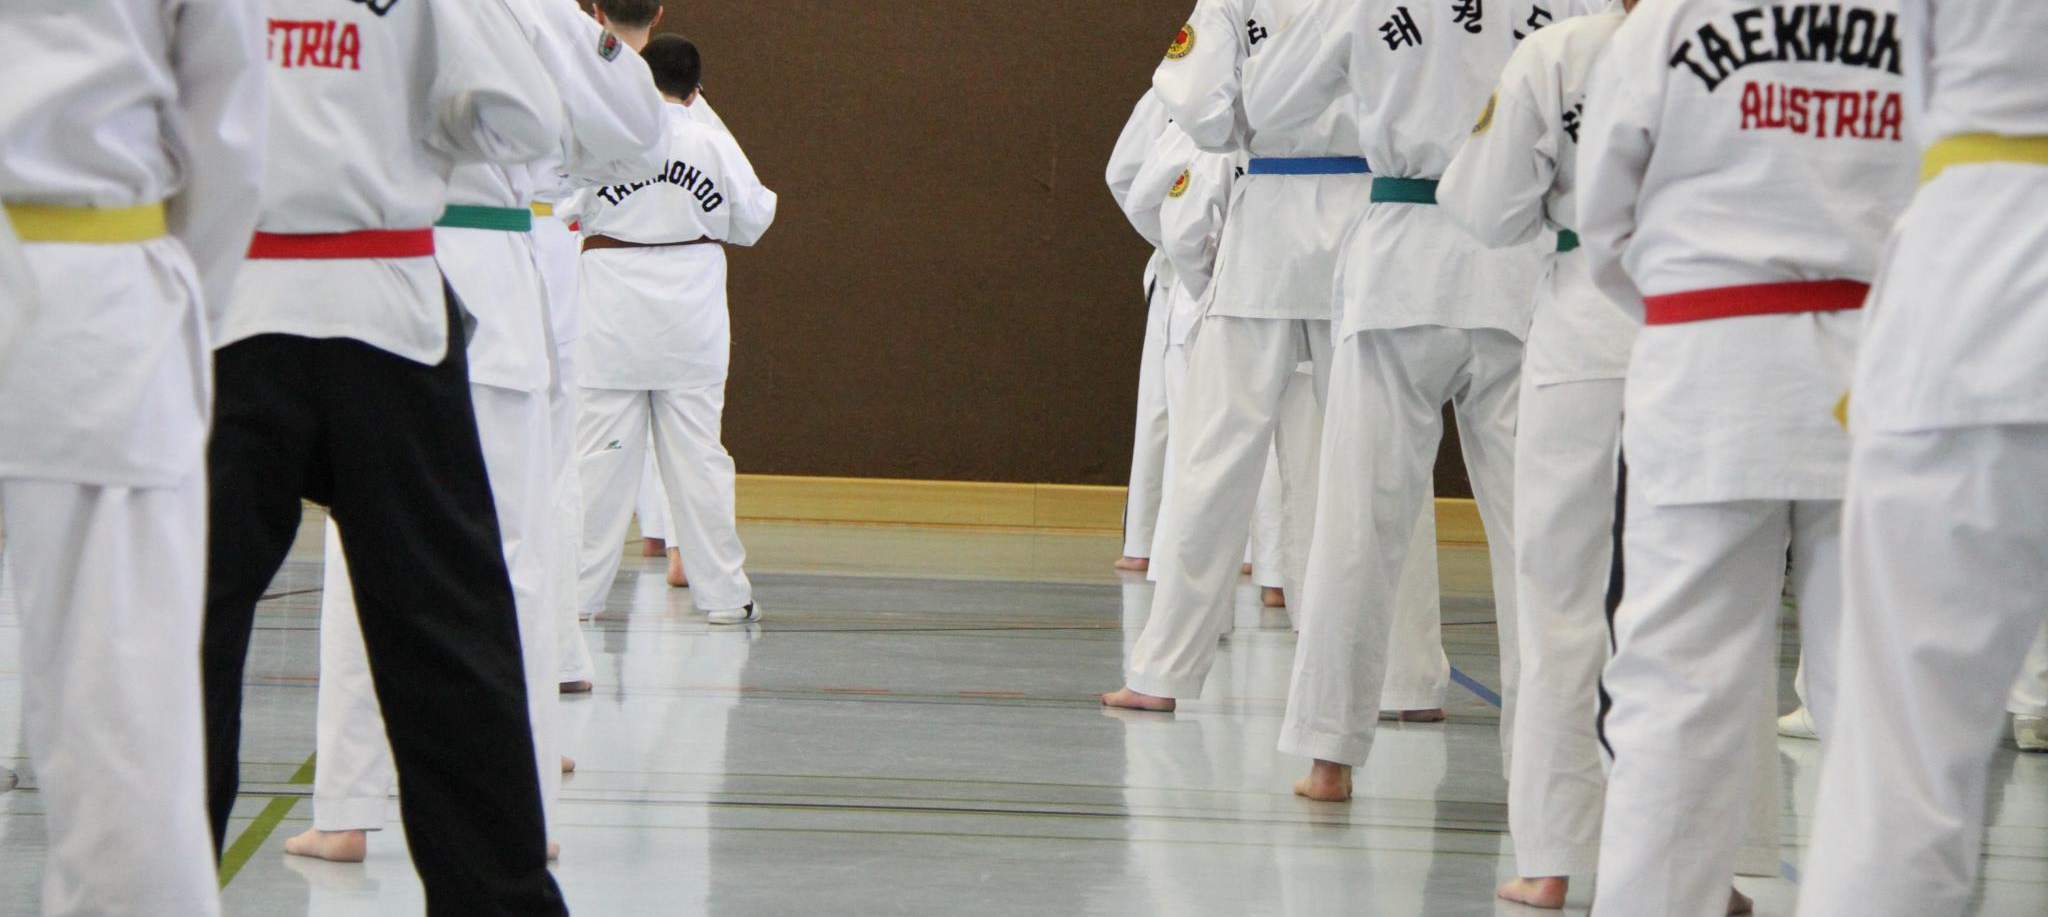 Taekwondo4you